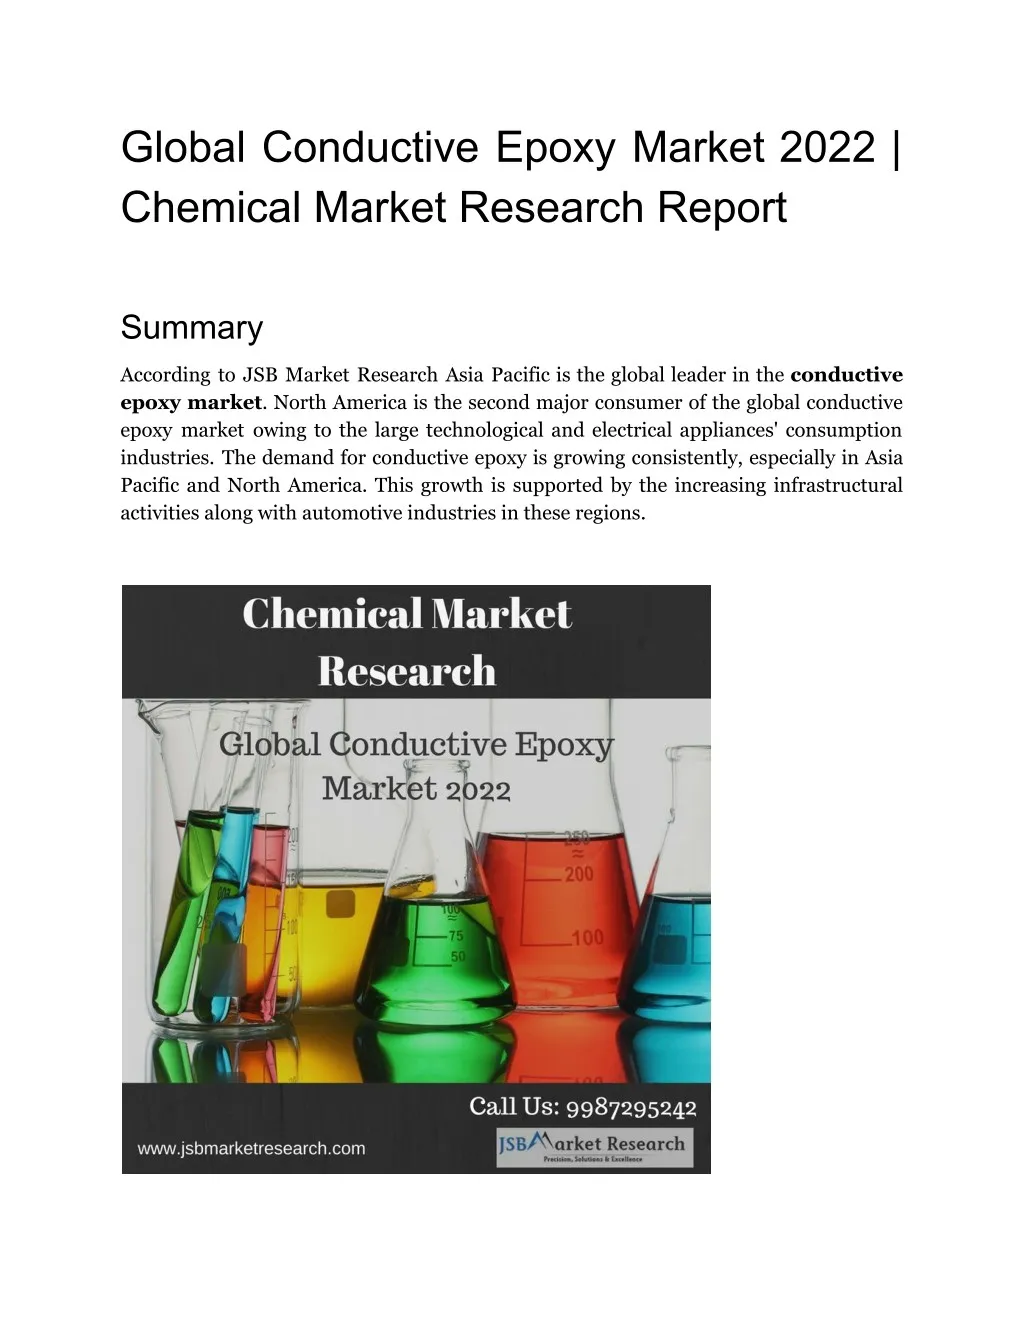 global conductive epoxy market 2022 chemical